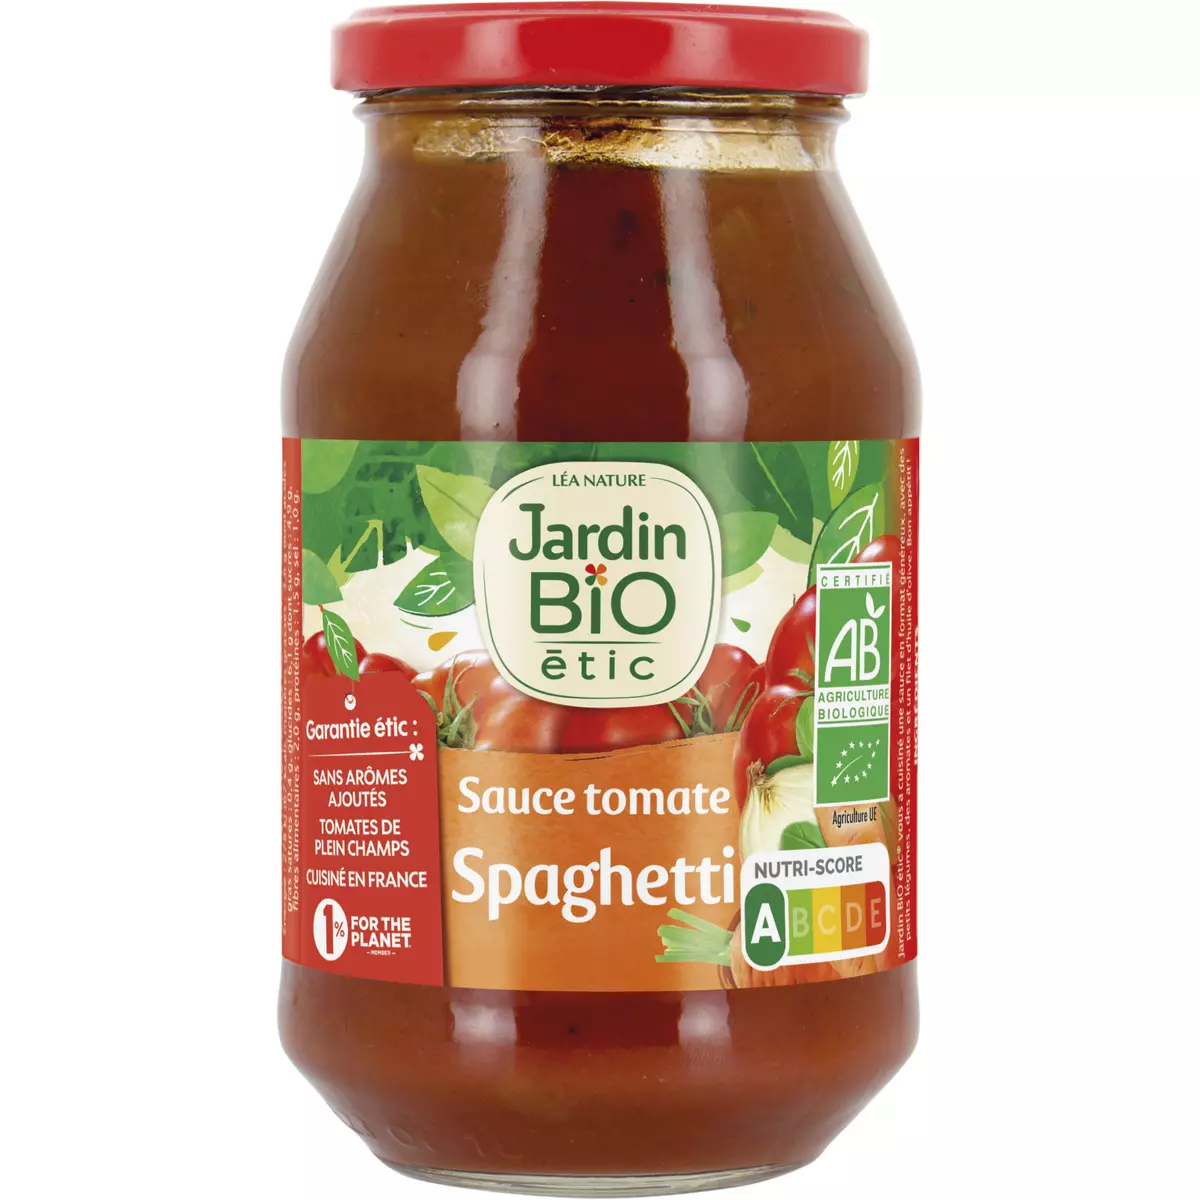 JARDIN BIO ETIC Sauce tomate spaghetti 510g